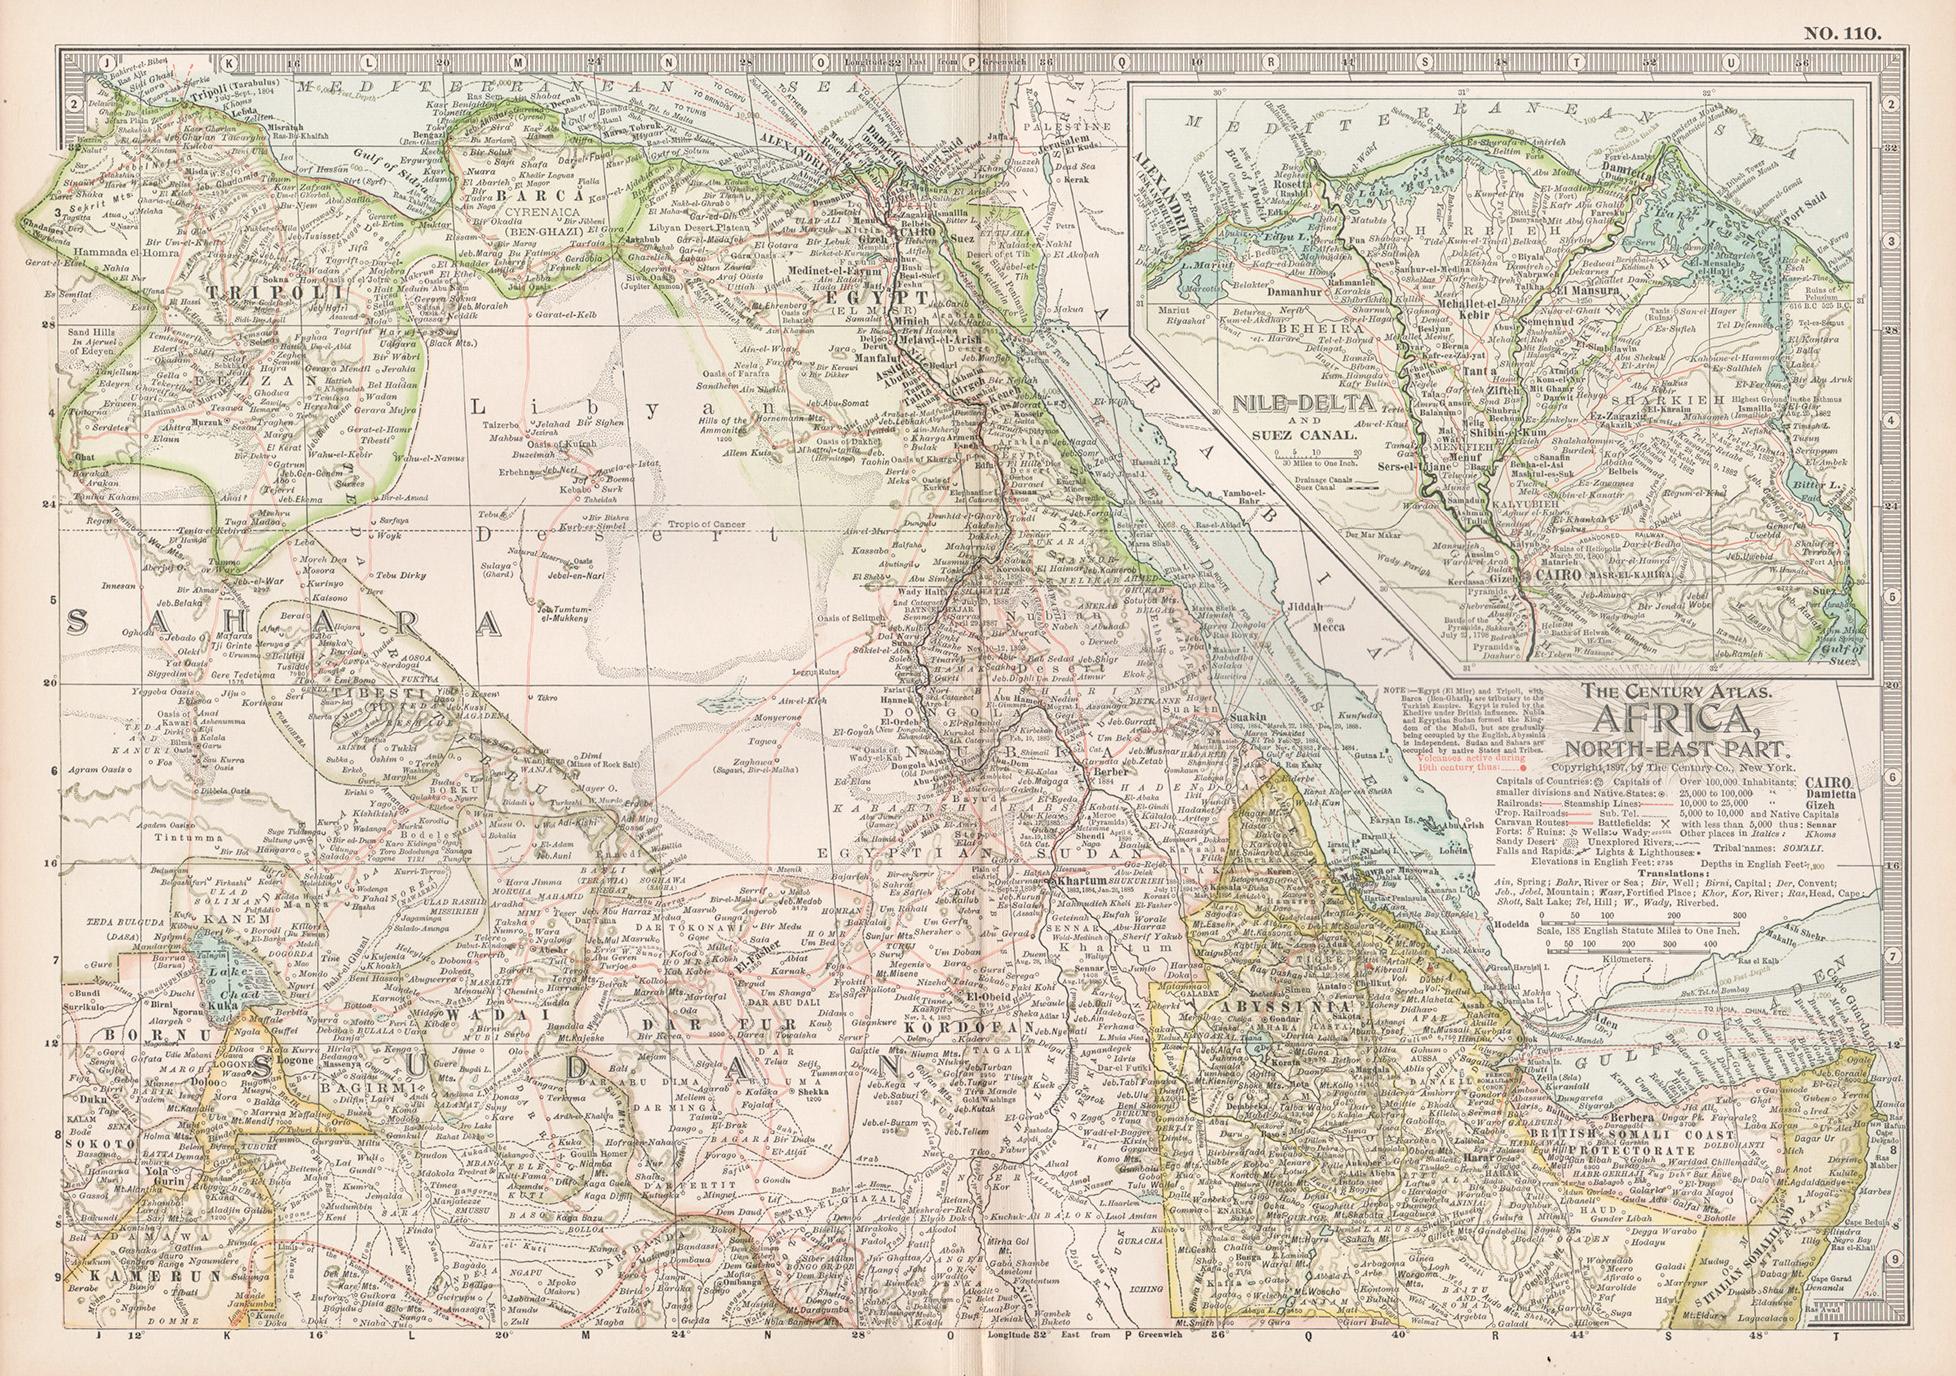 Unknown Print - Africa. North-East Part. Century Atlas antique vintage map